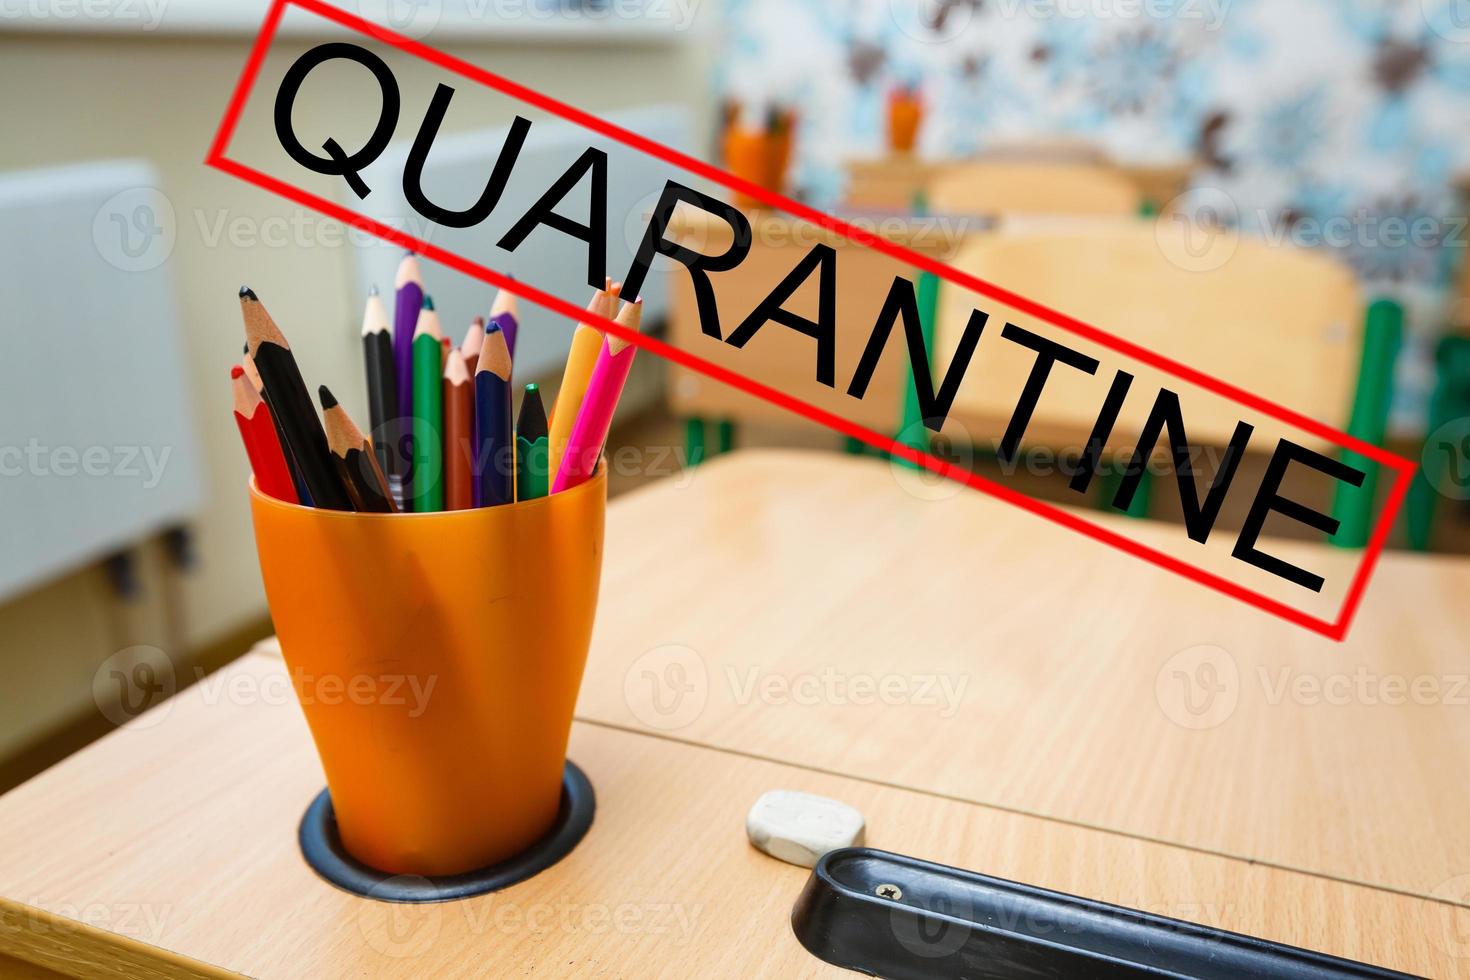 Quarantine. school coronavirus. Viruses. Epidemics. The medicine. photo